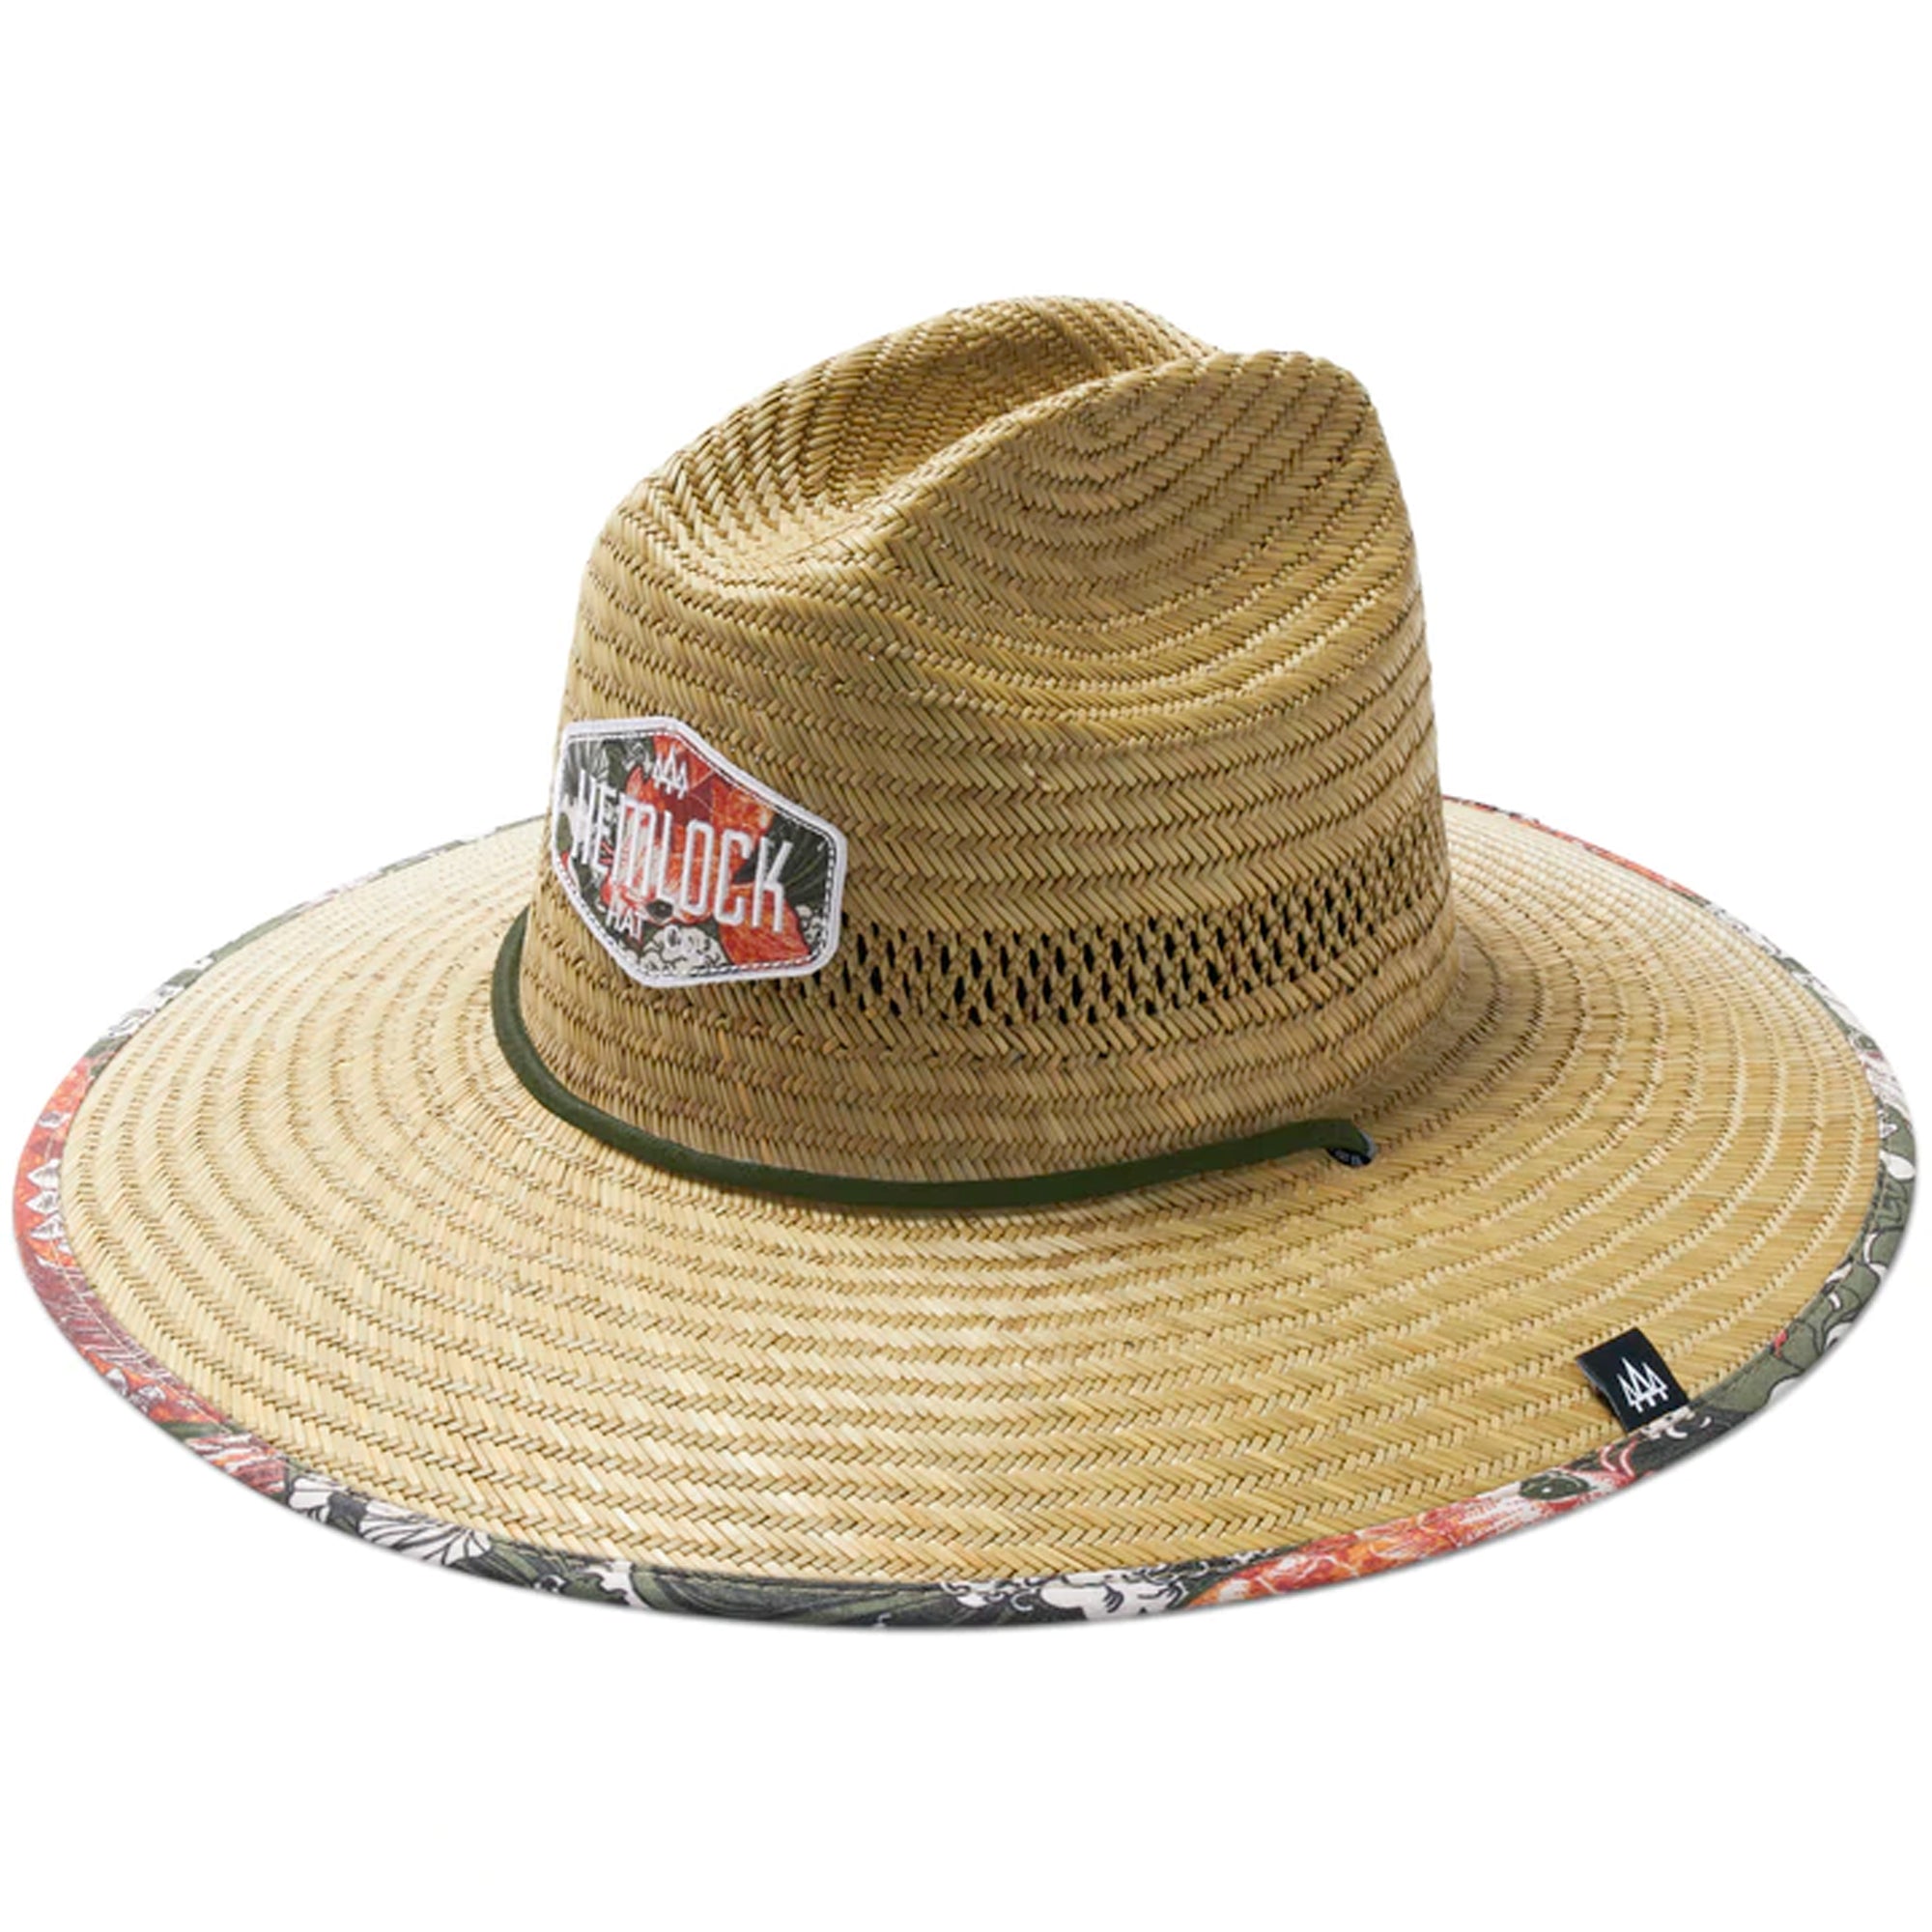 Hemlock Hat Co. Fortune Straw Hat